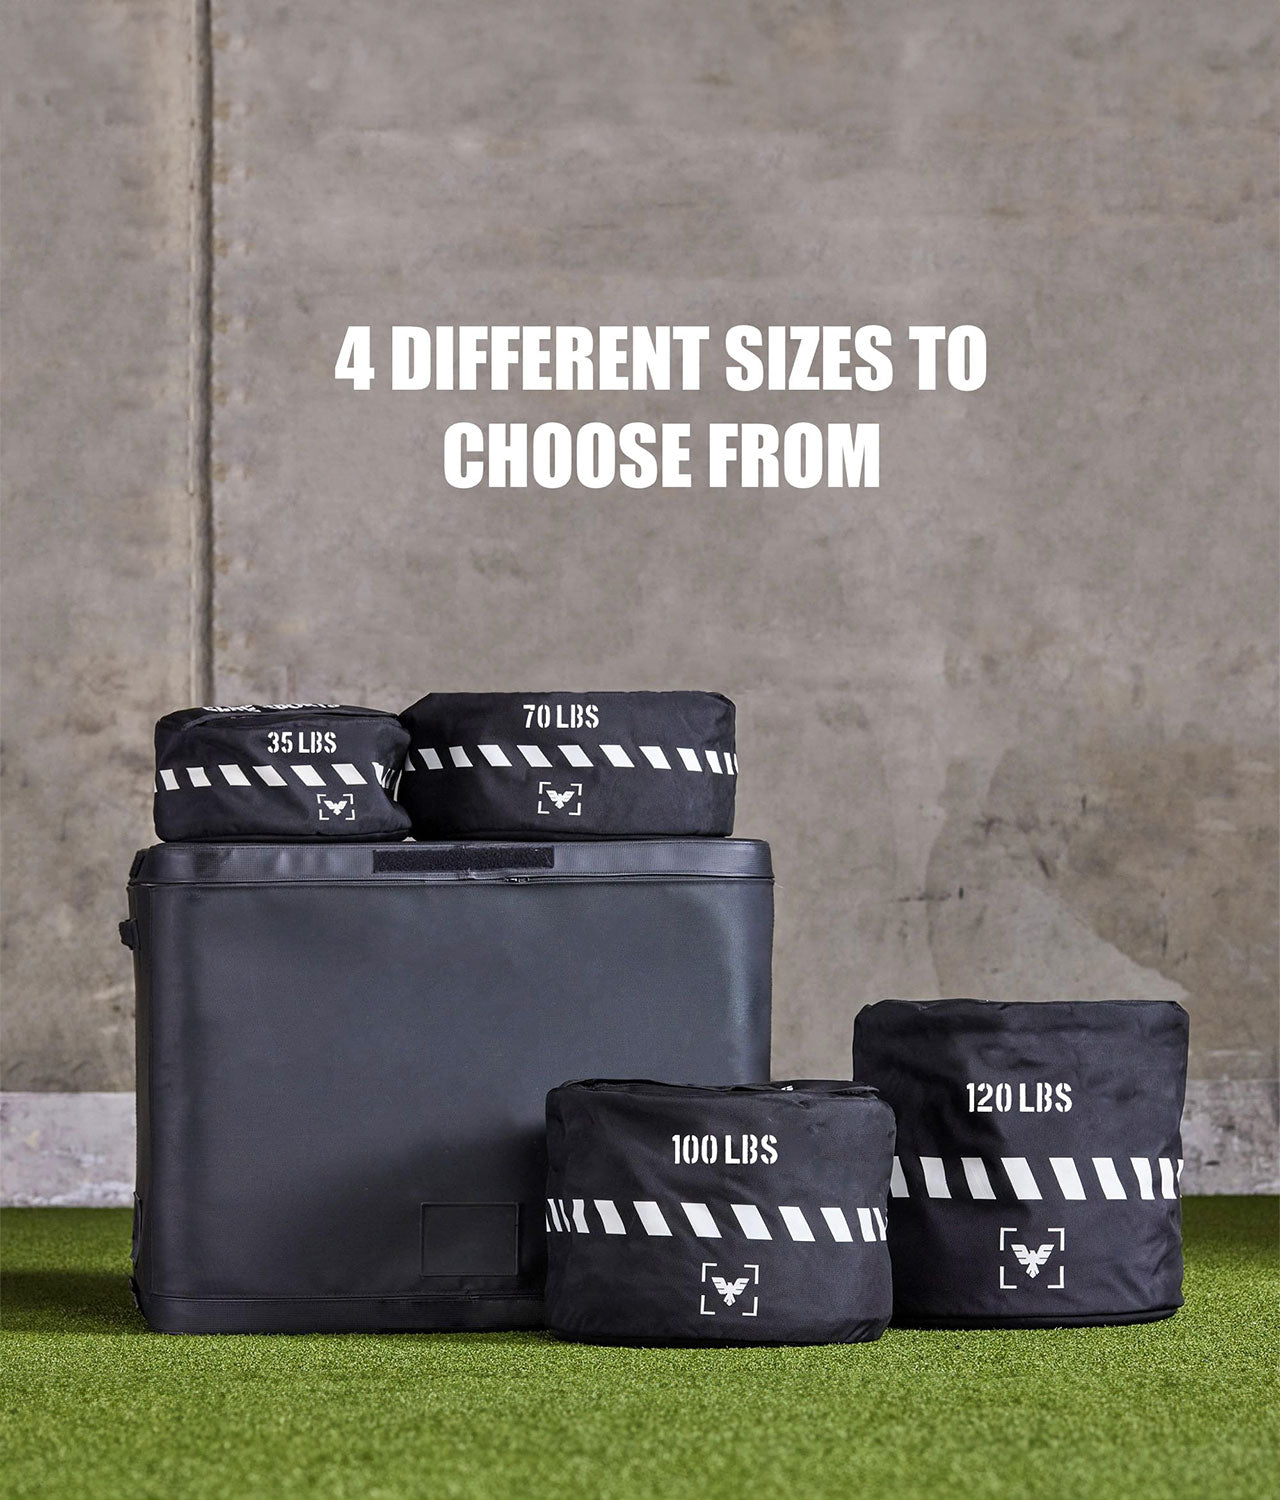 Elite Sports Core Round Workout Sandbag 120 lbs 4Different Sizes to Choose